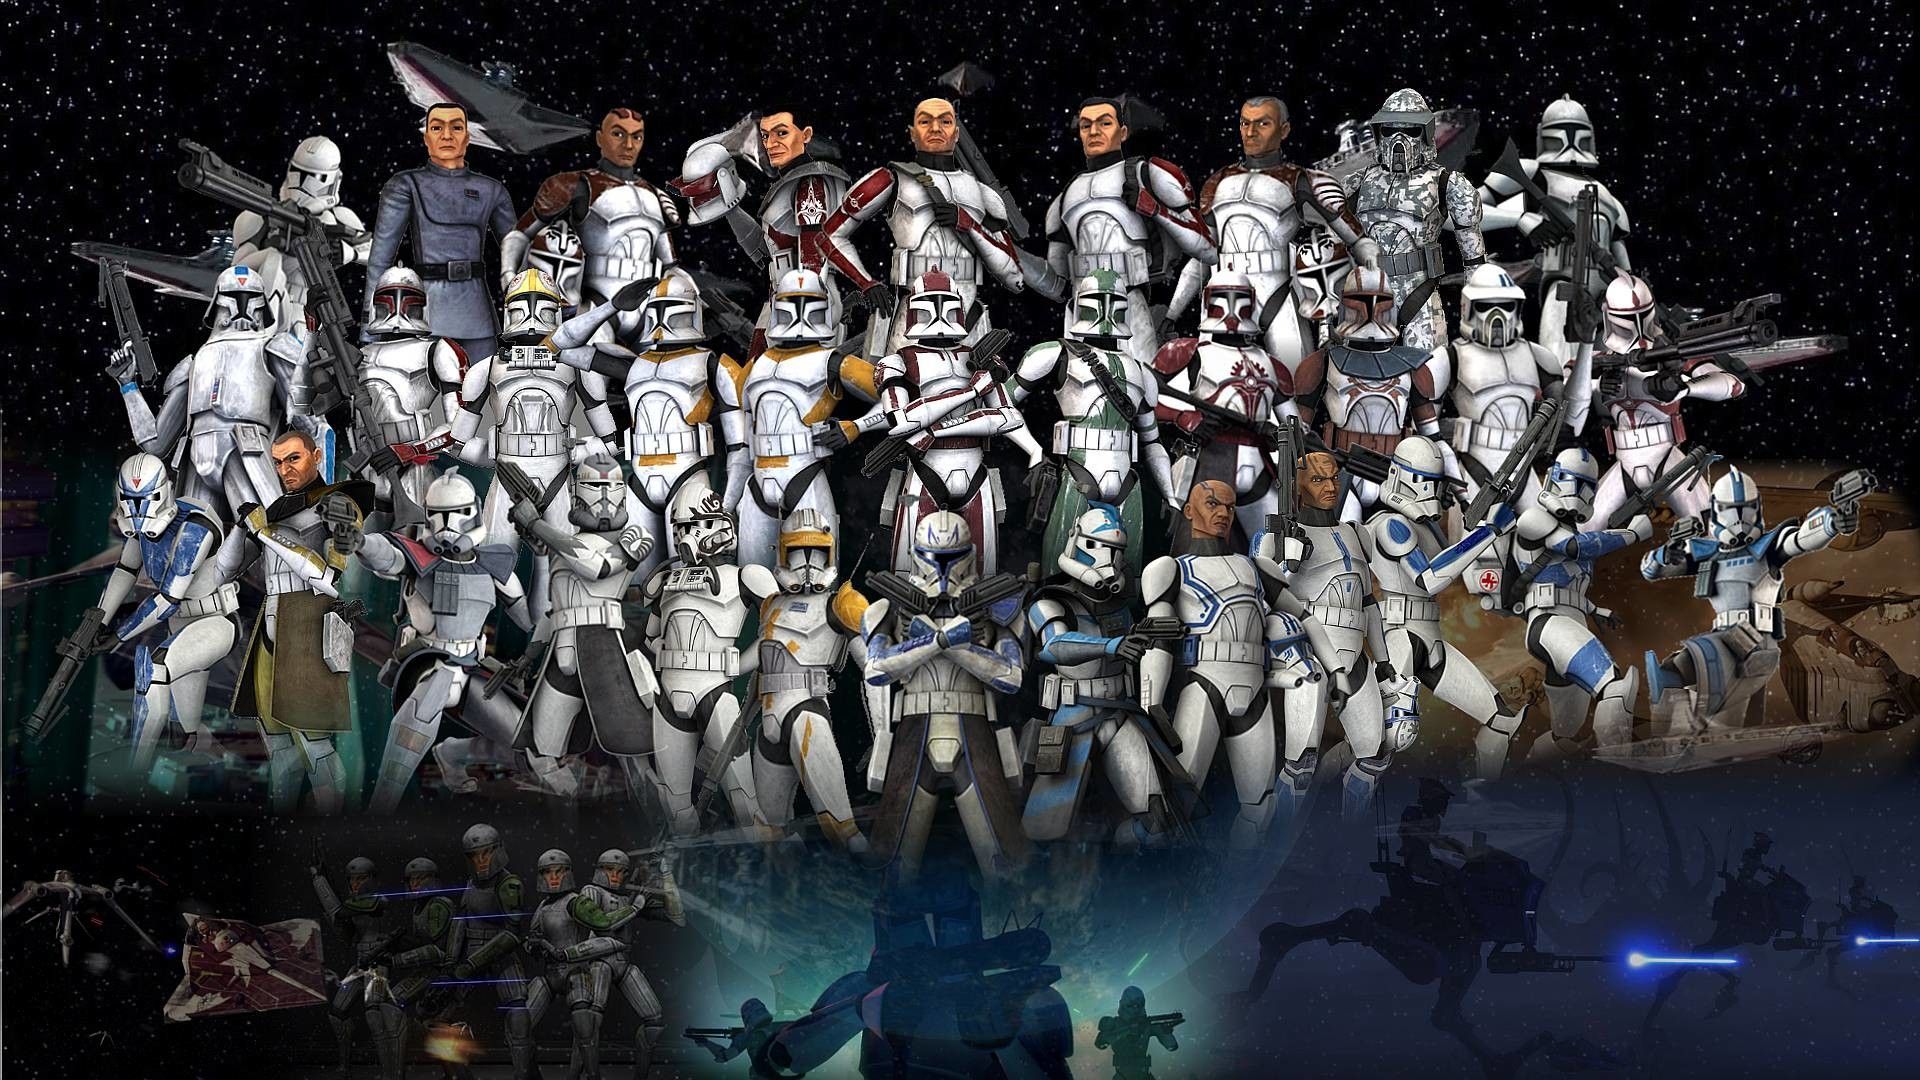 501st Clone Trooper Wallpaper Free 501st Clone Trooper Background